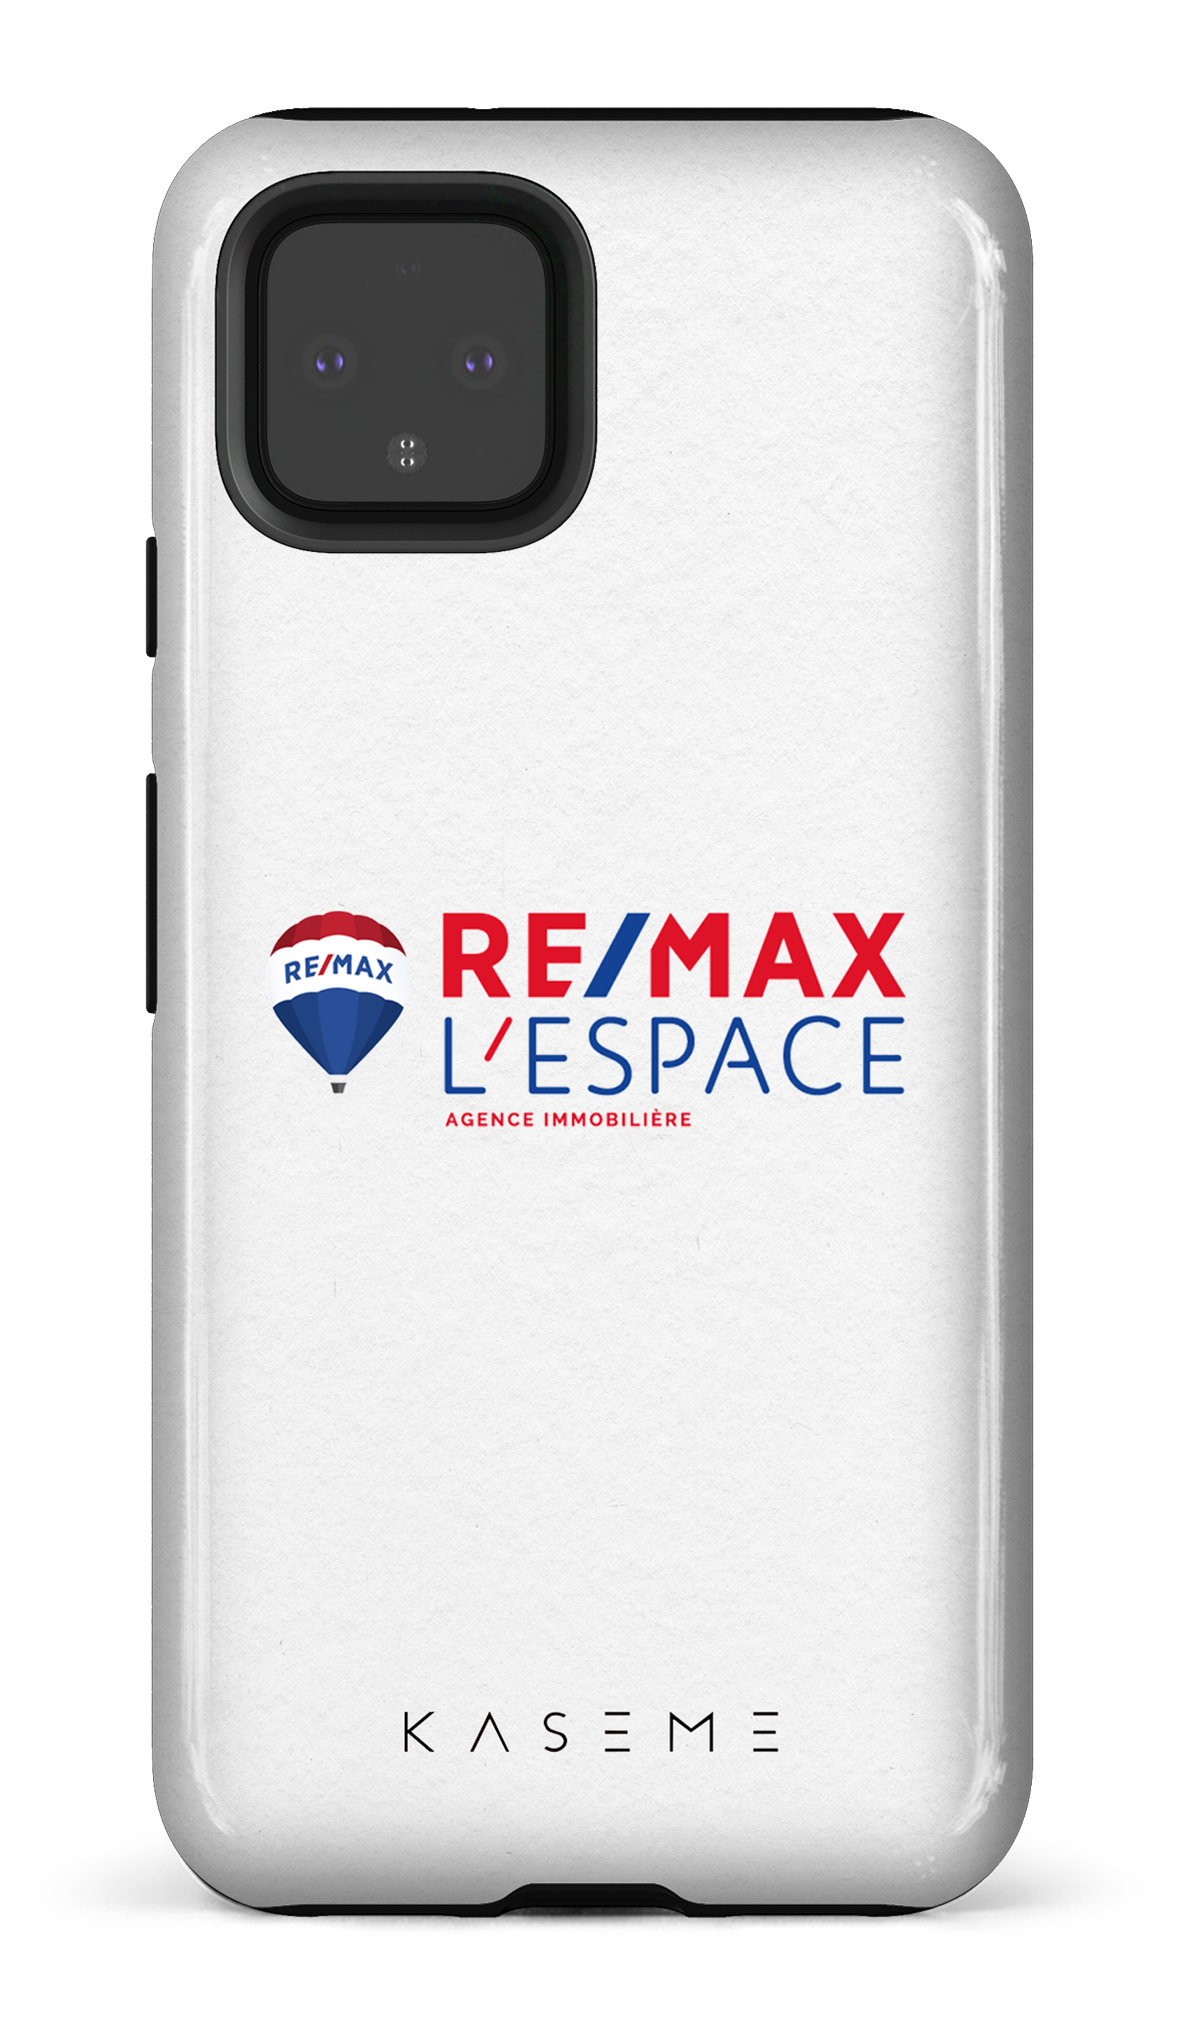 Remax L'Espace Blanc - Google Pixel 4